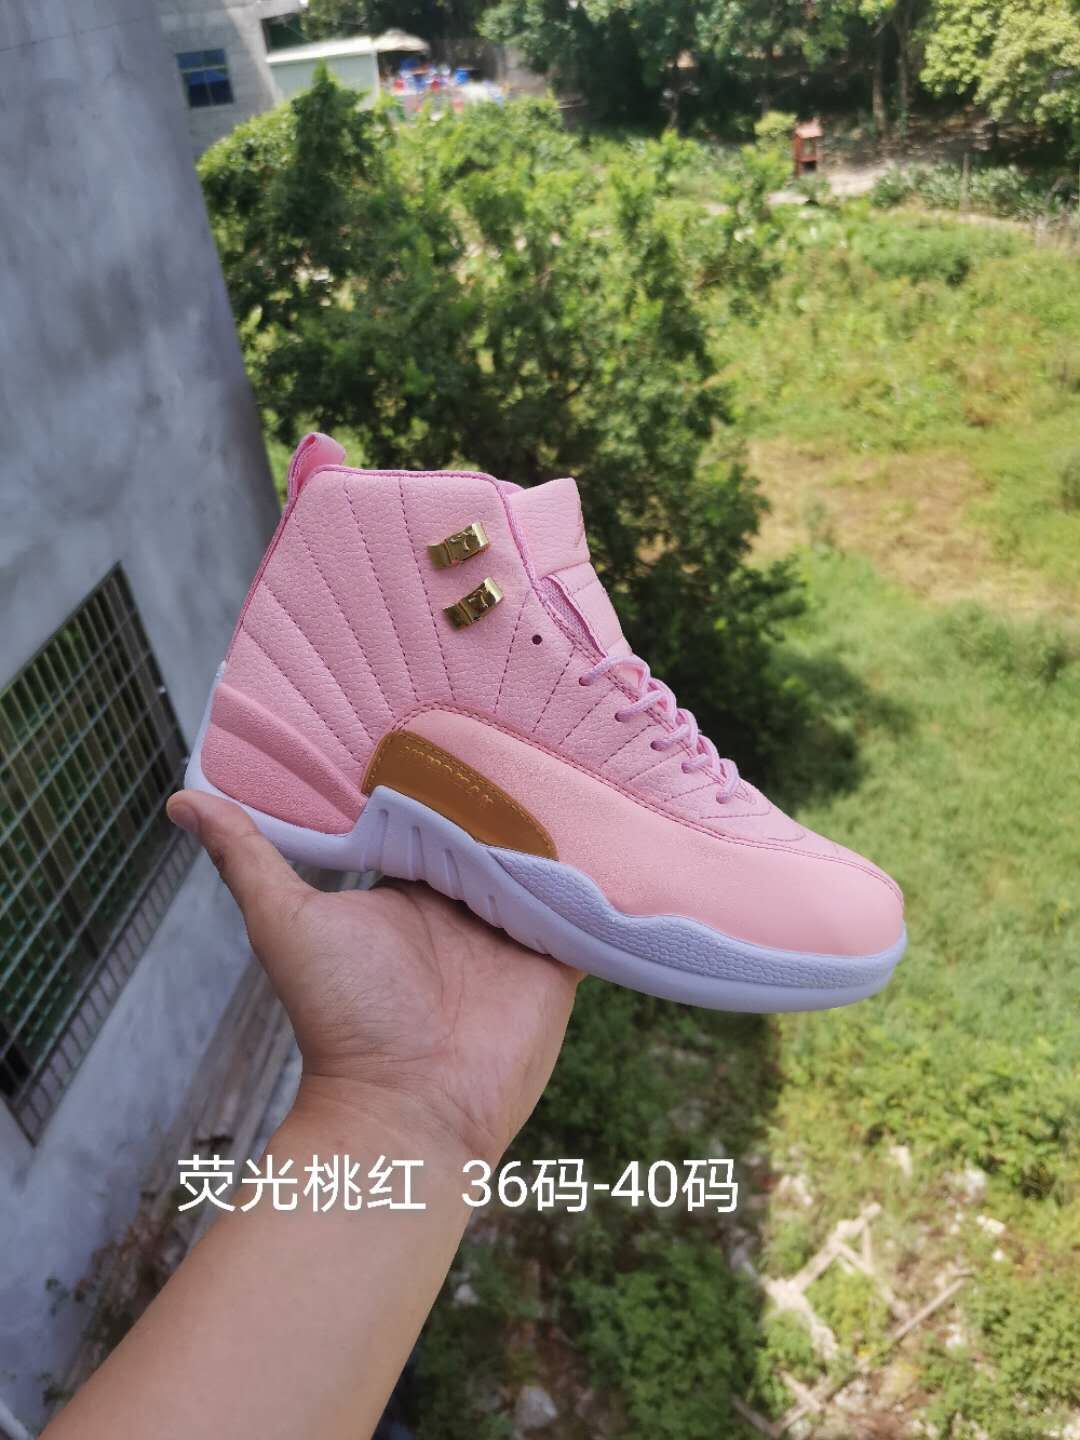 New Air Jordan 12 Retro Pink Shoes For Women